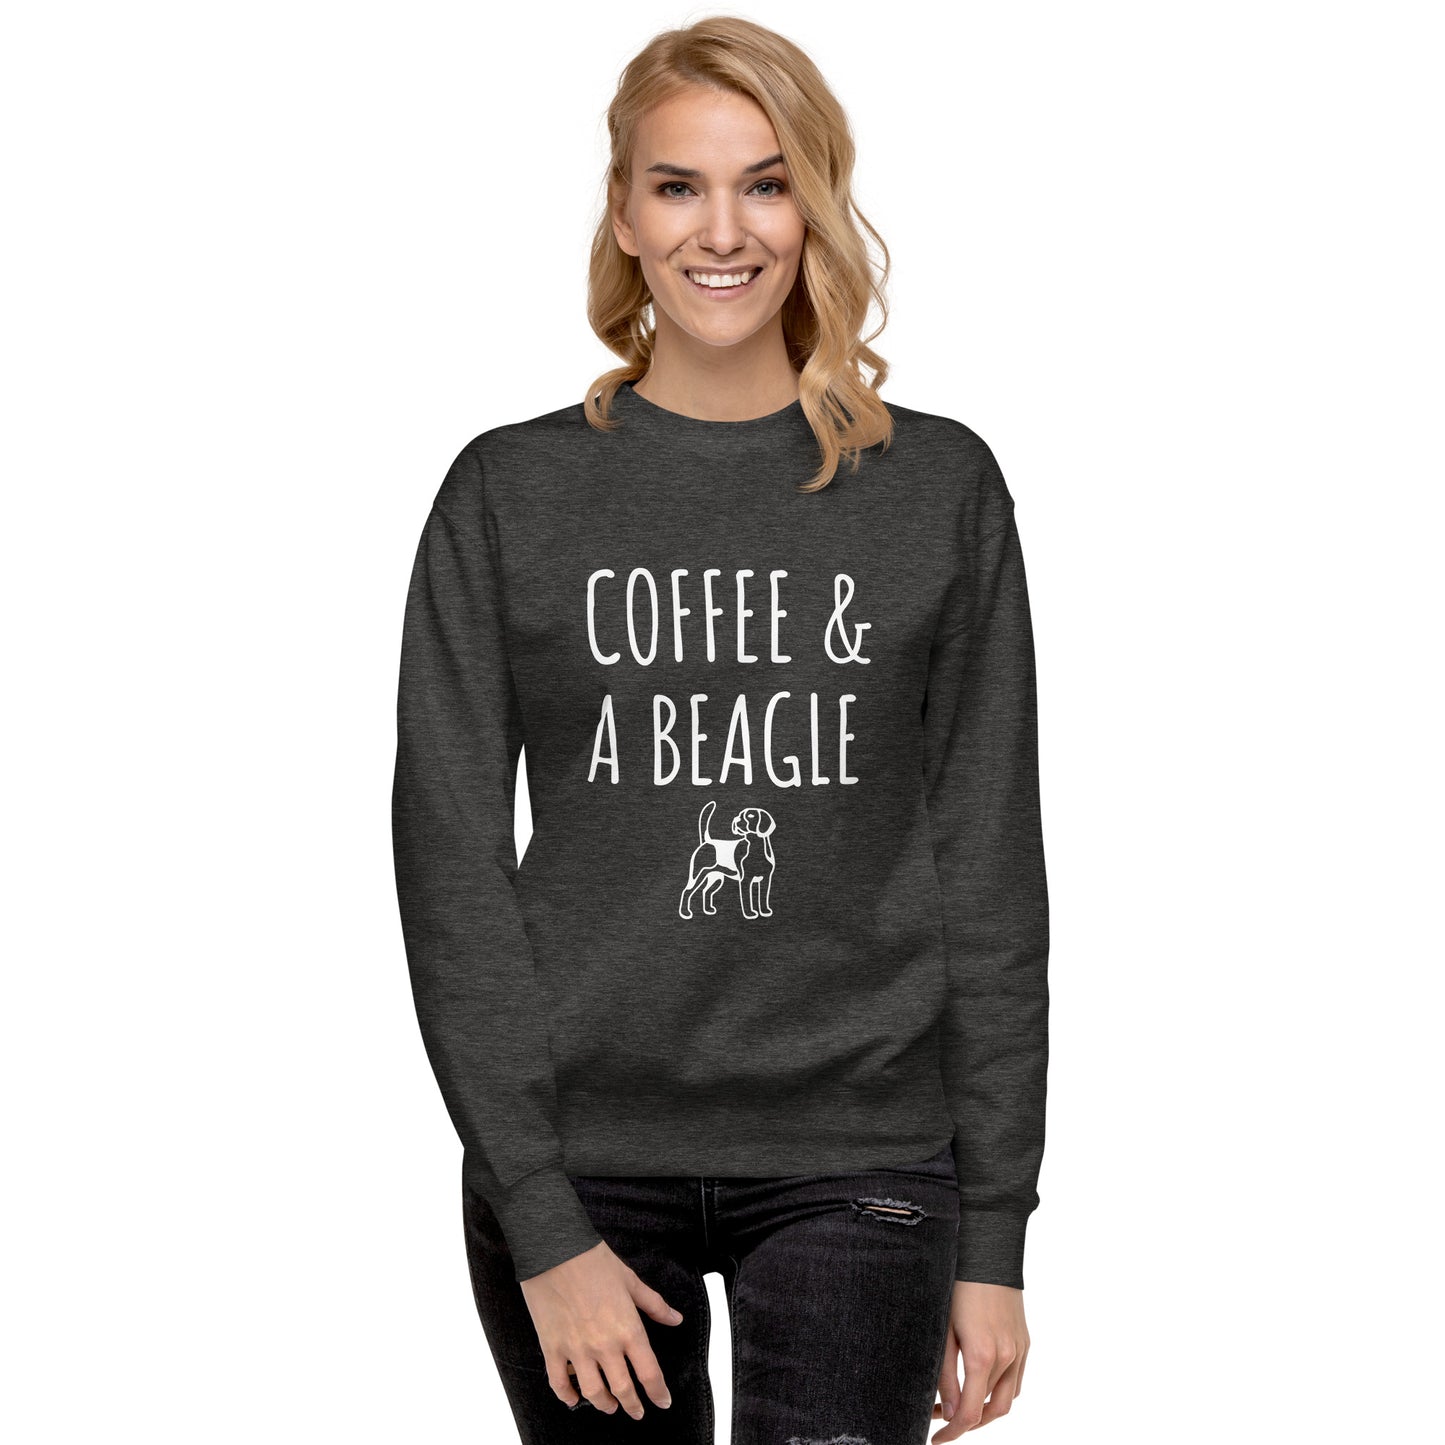 Coffee and a Beagle - Sweatshirt